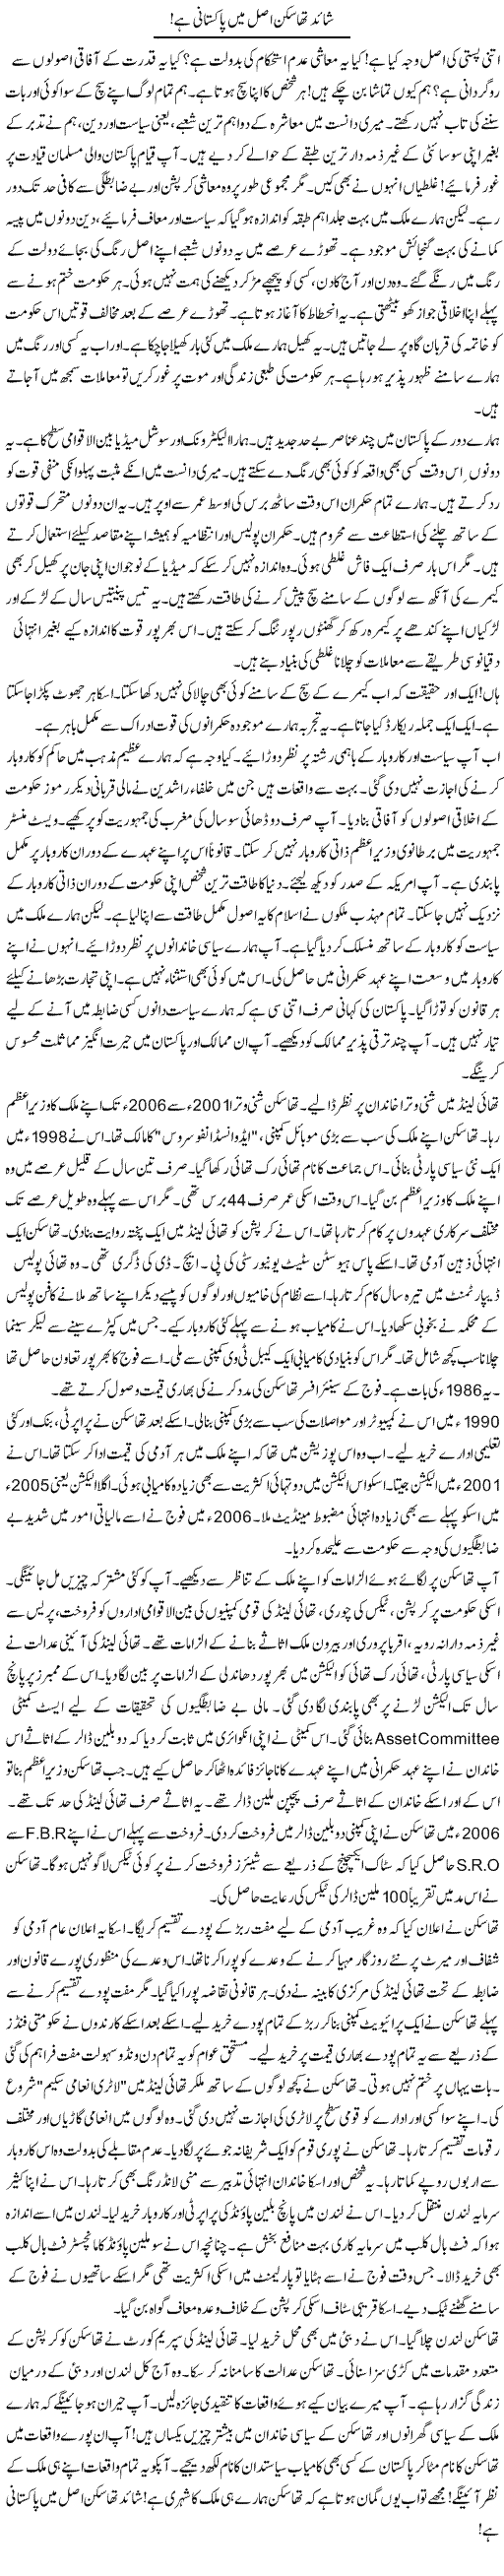 Shayad Tha Skn Asal Main Pakistani Hai | Rao Manzar Hayat | Daily Urdu Columns